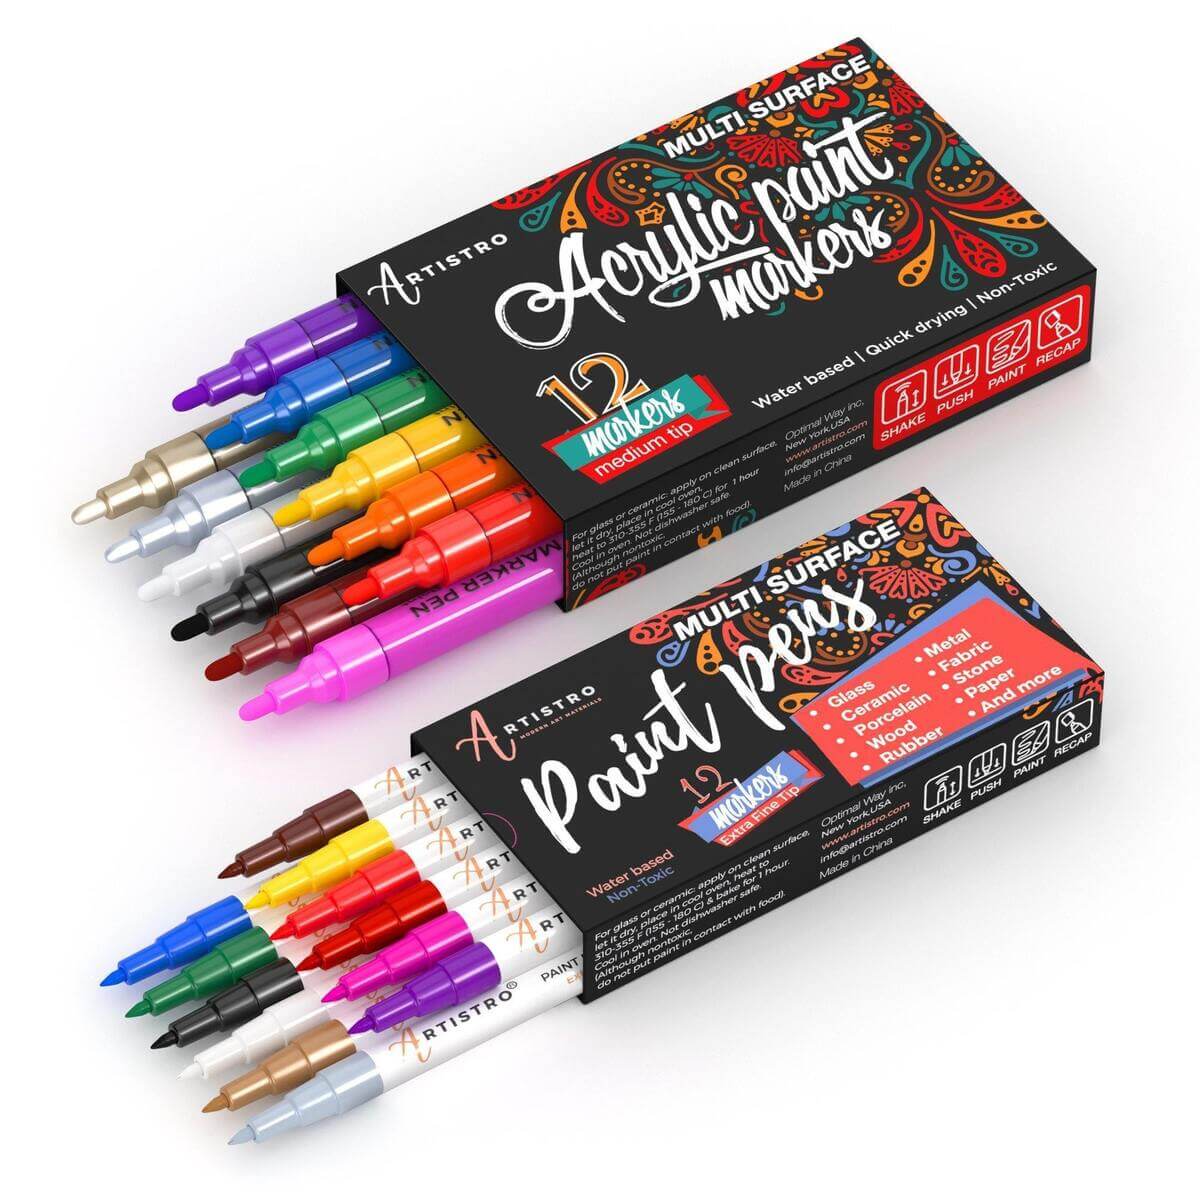 Extra fine tip acrylic paint pens - Set of 30 ultra fine paint pens